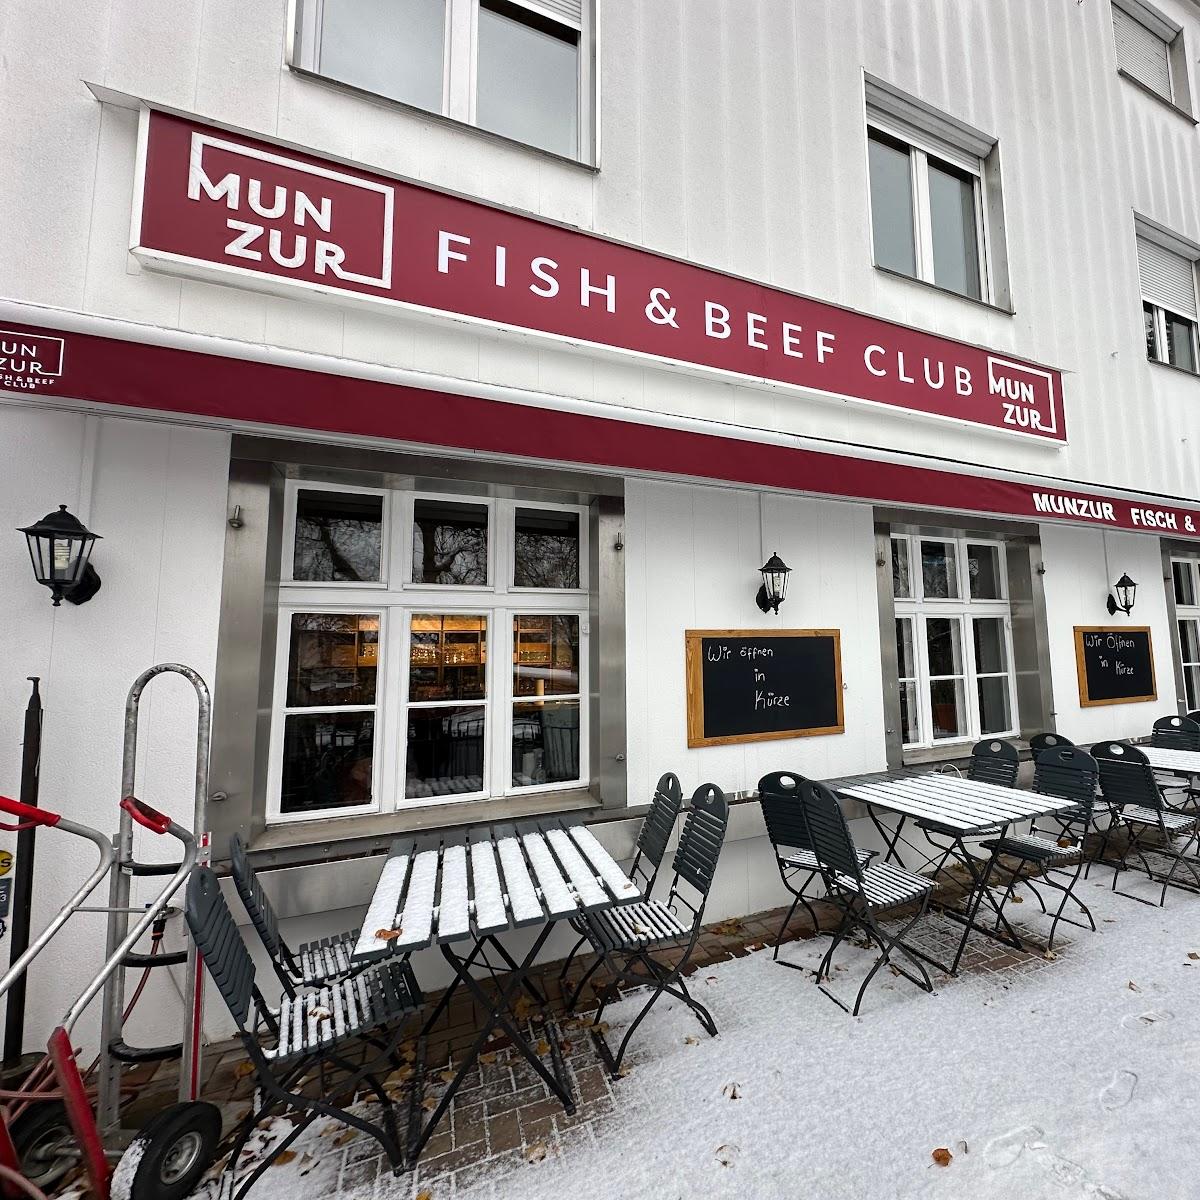 Restaurant "Munzur Fish & Beef Club" in Berlin